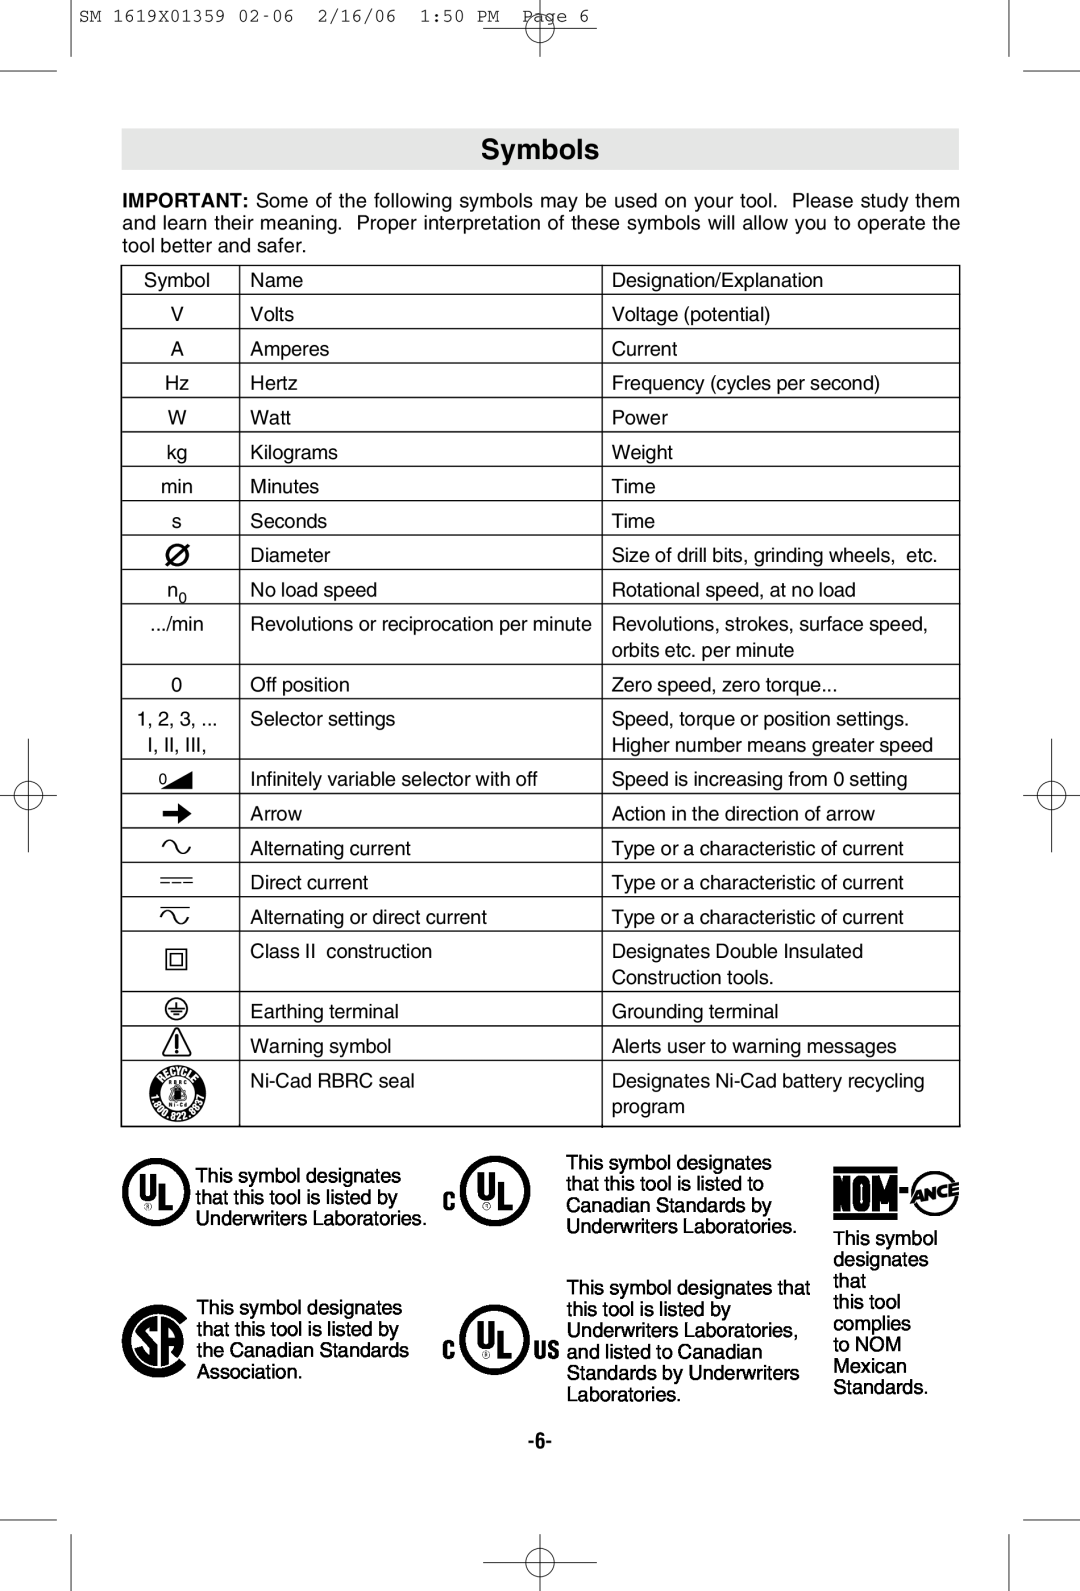 Skil HD5860 manual Symbols 